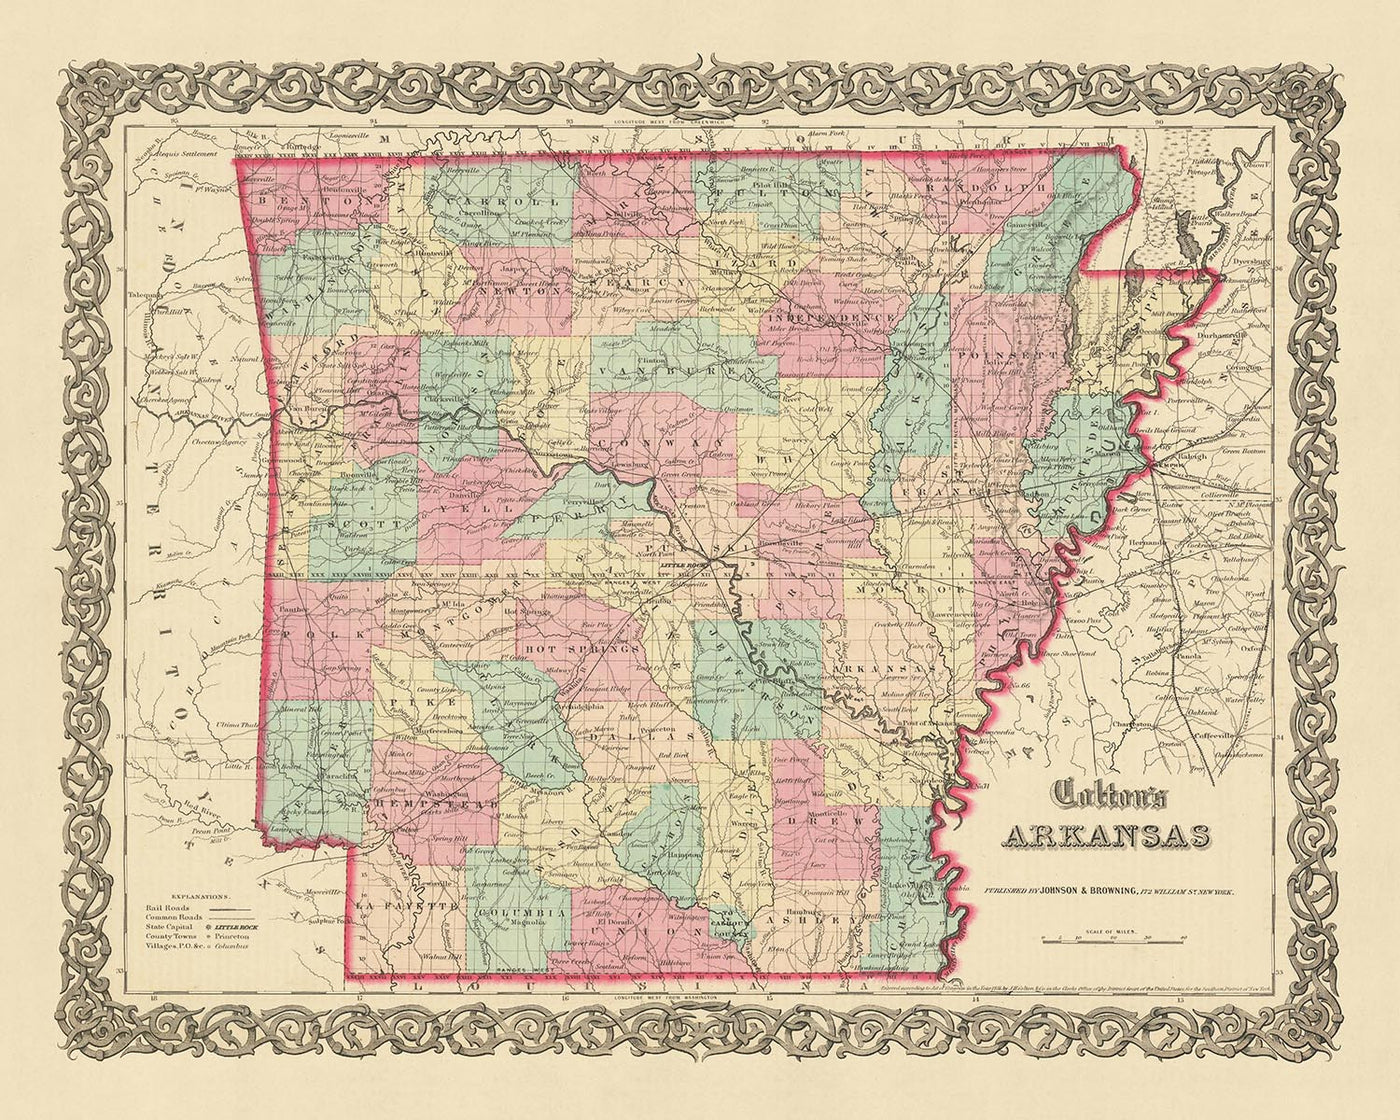 Old Map of Arkansas by J.H. Colton, 1855: Little Rock, Fort Smith, Fayetteville, Pine Bluff, Van Buren